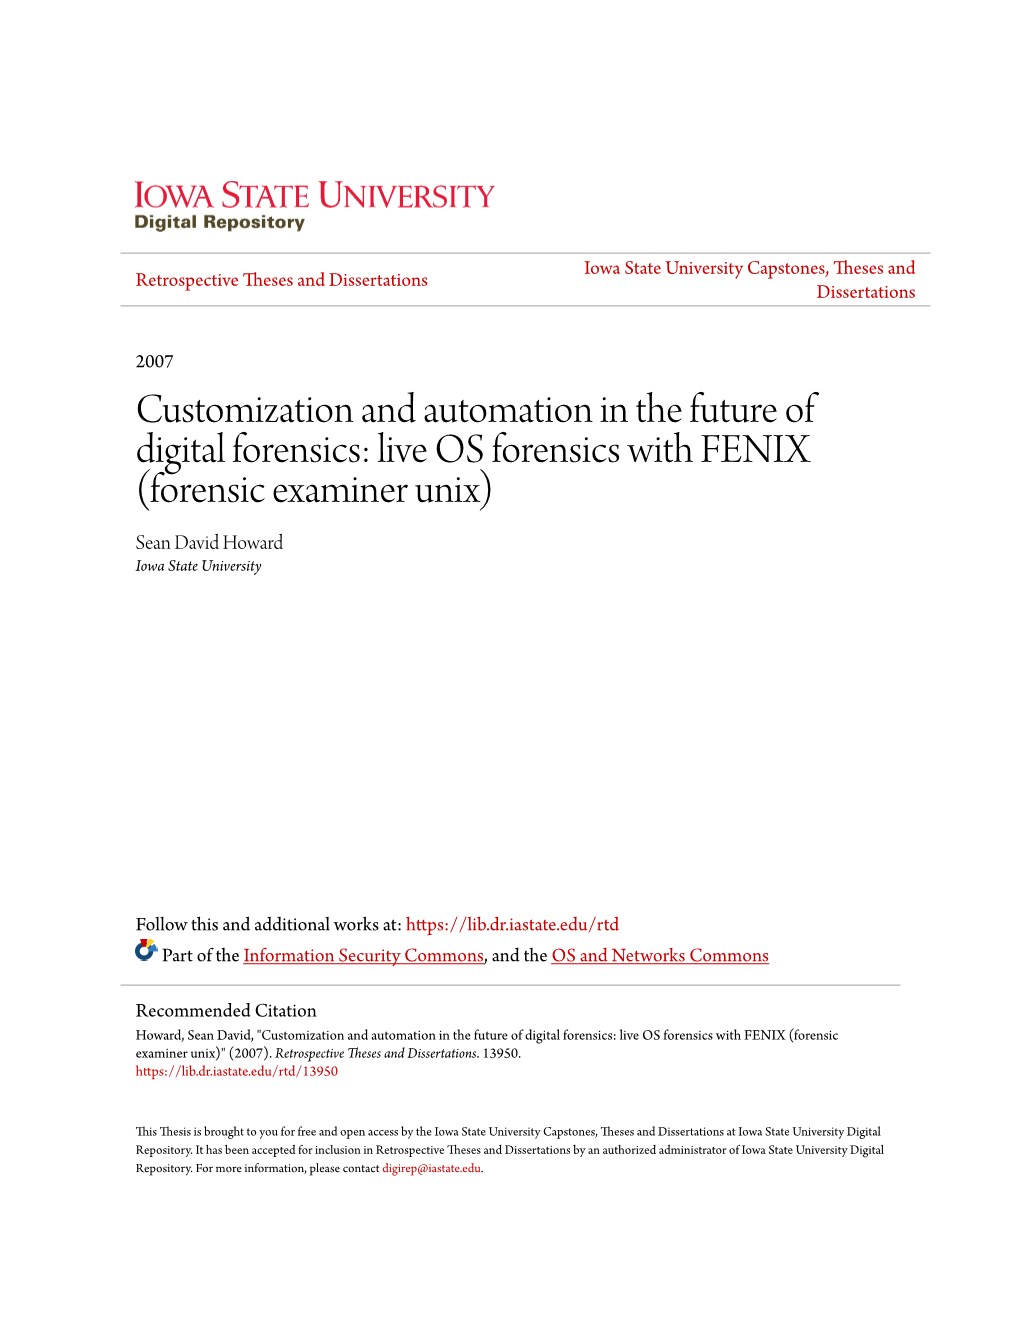 Live OS Forensics with FENIX (Forensic Examiner Unix) Sean David Howard Iowa State University